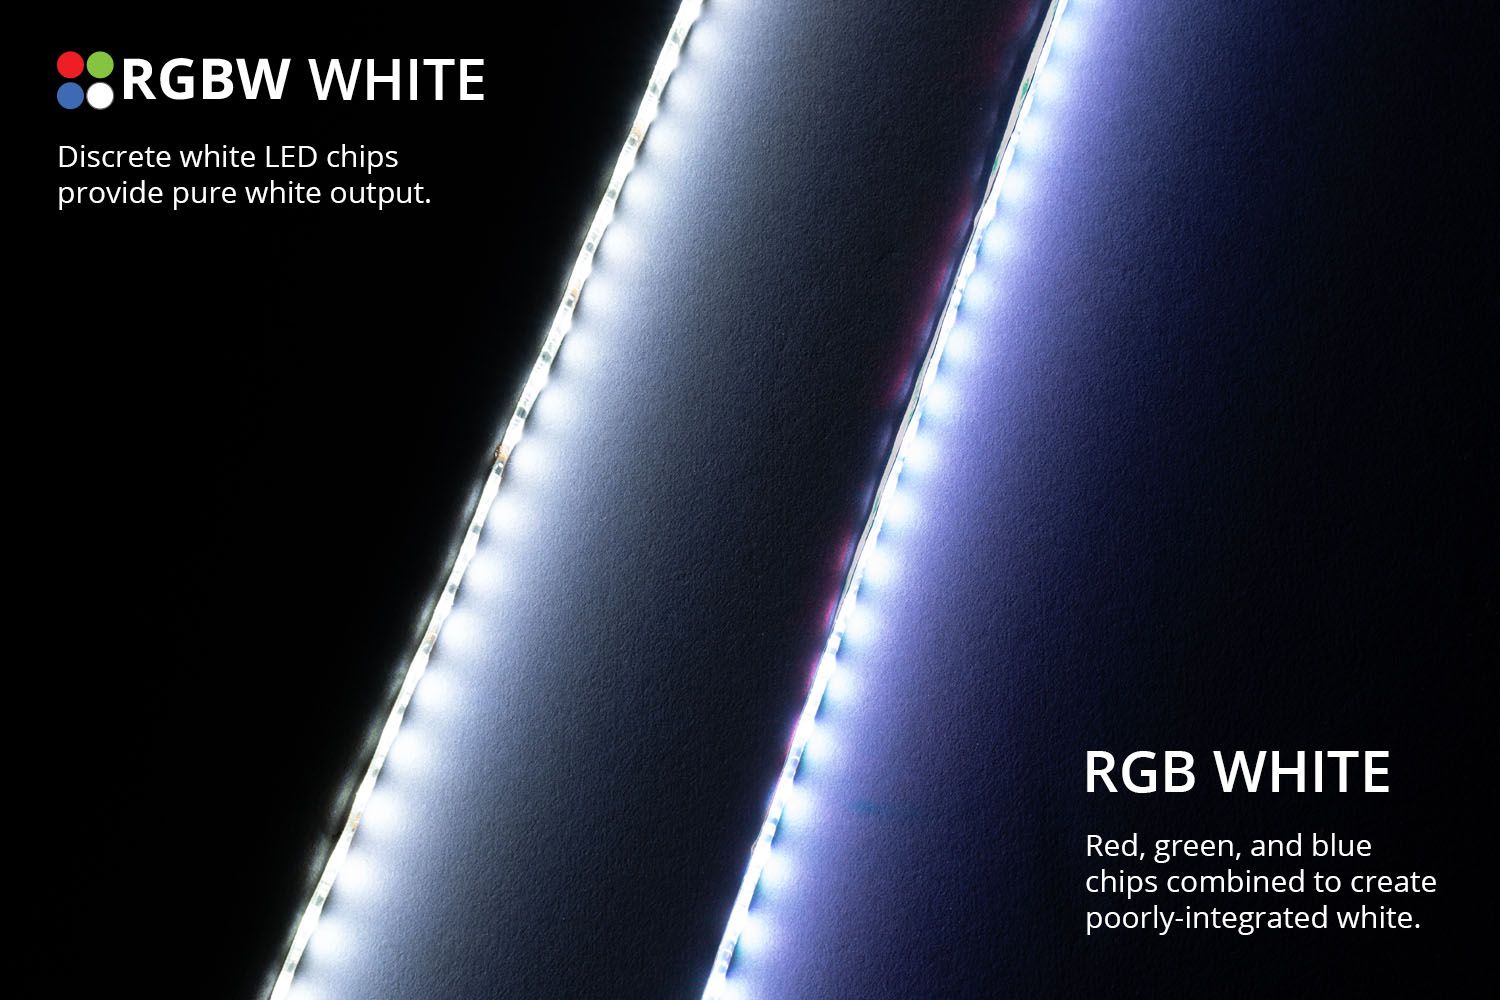 Diode Dynamics مجموعة إضاءة LED متعددة الألوان RGBW